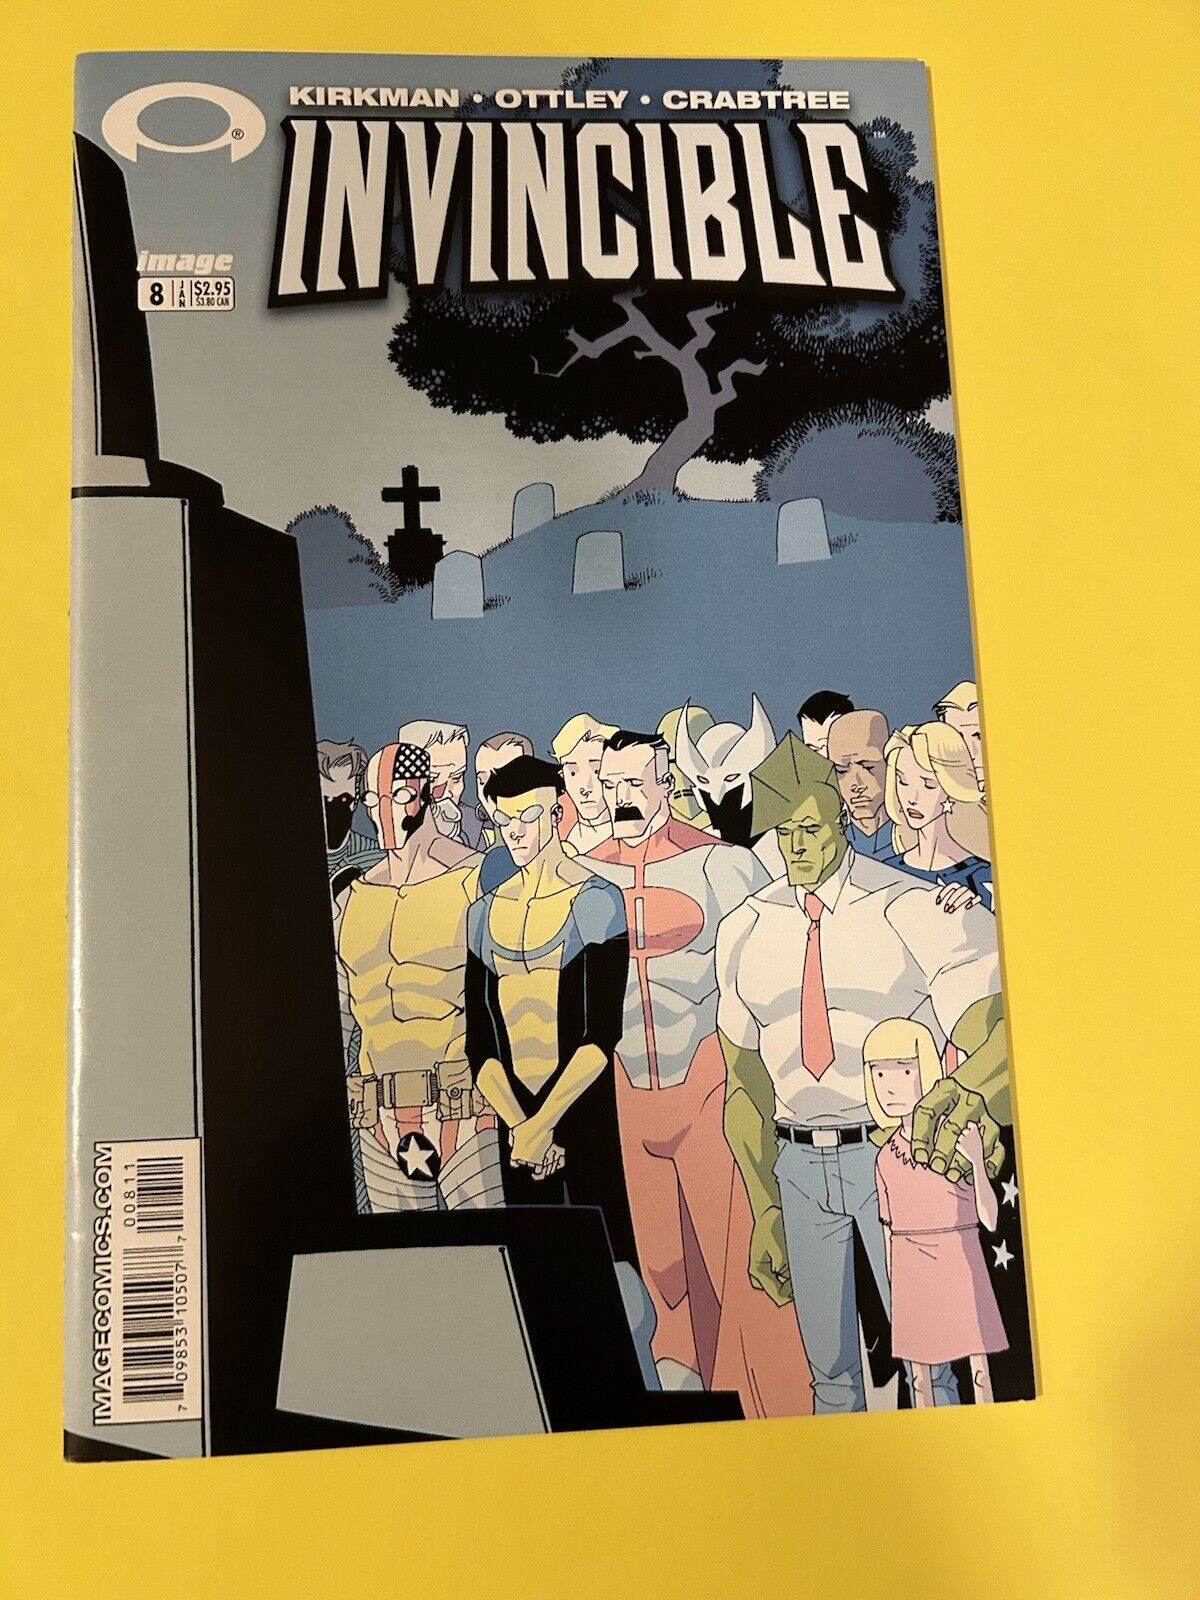 Invincible 8 - Image Comics - High Grade - NM+ - CGC Ready